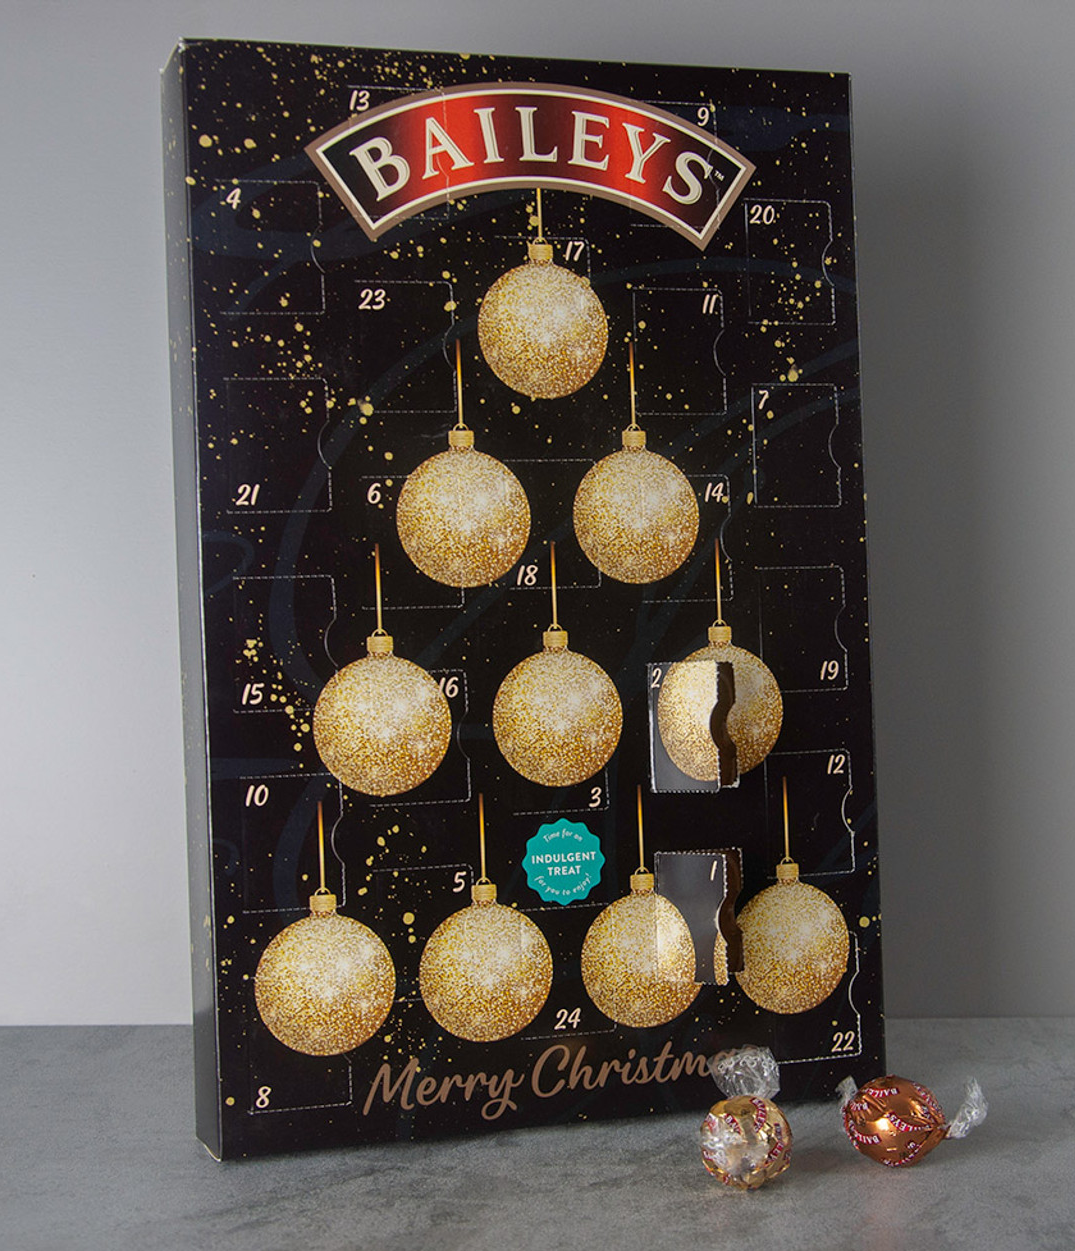 Baileys Chocolate Truffle Advent Calendar - Inhalt Content (EN)